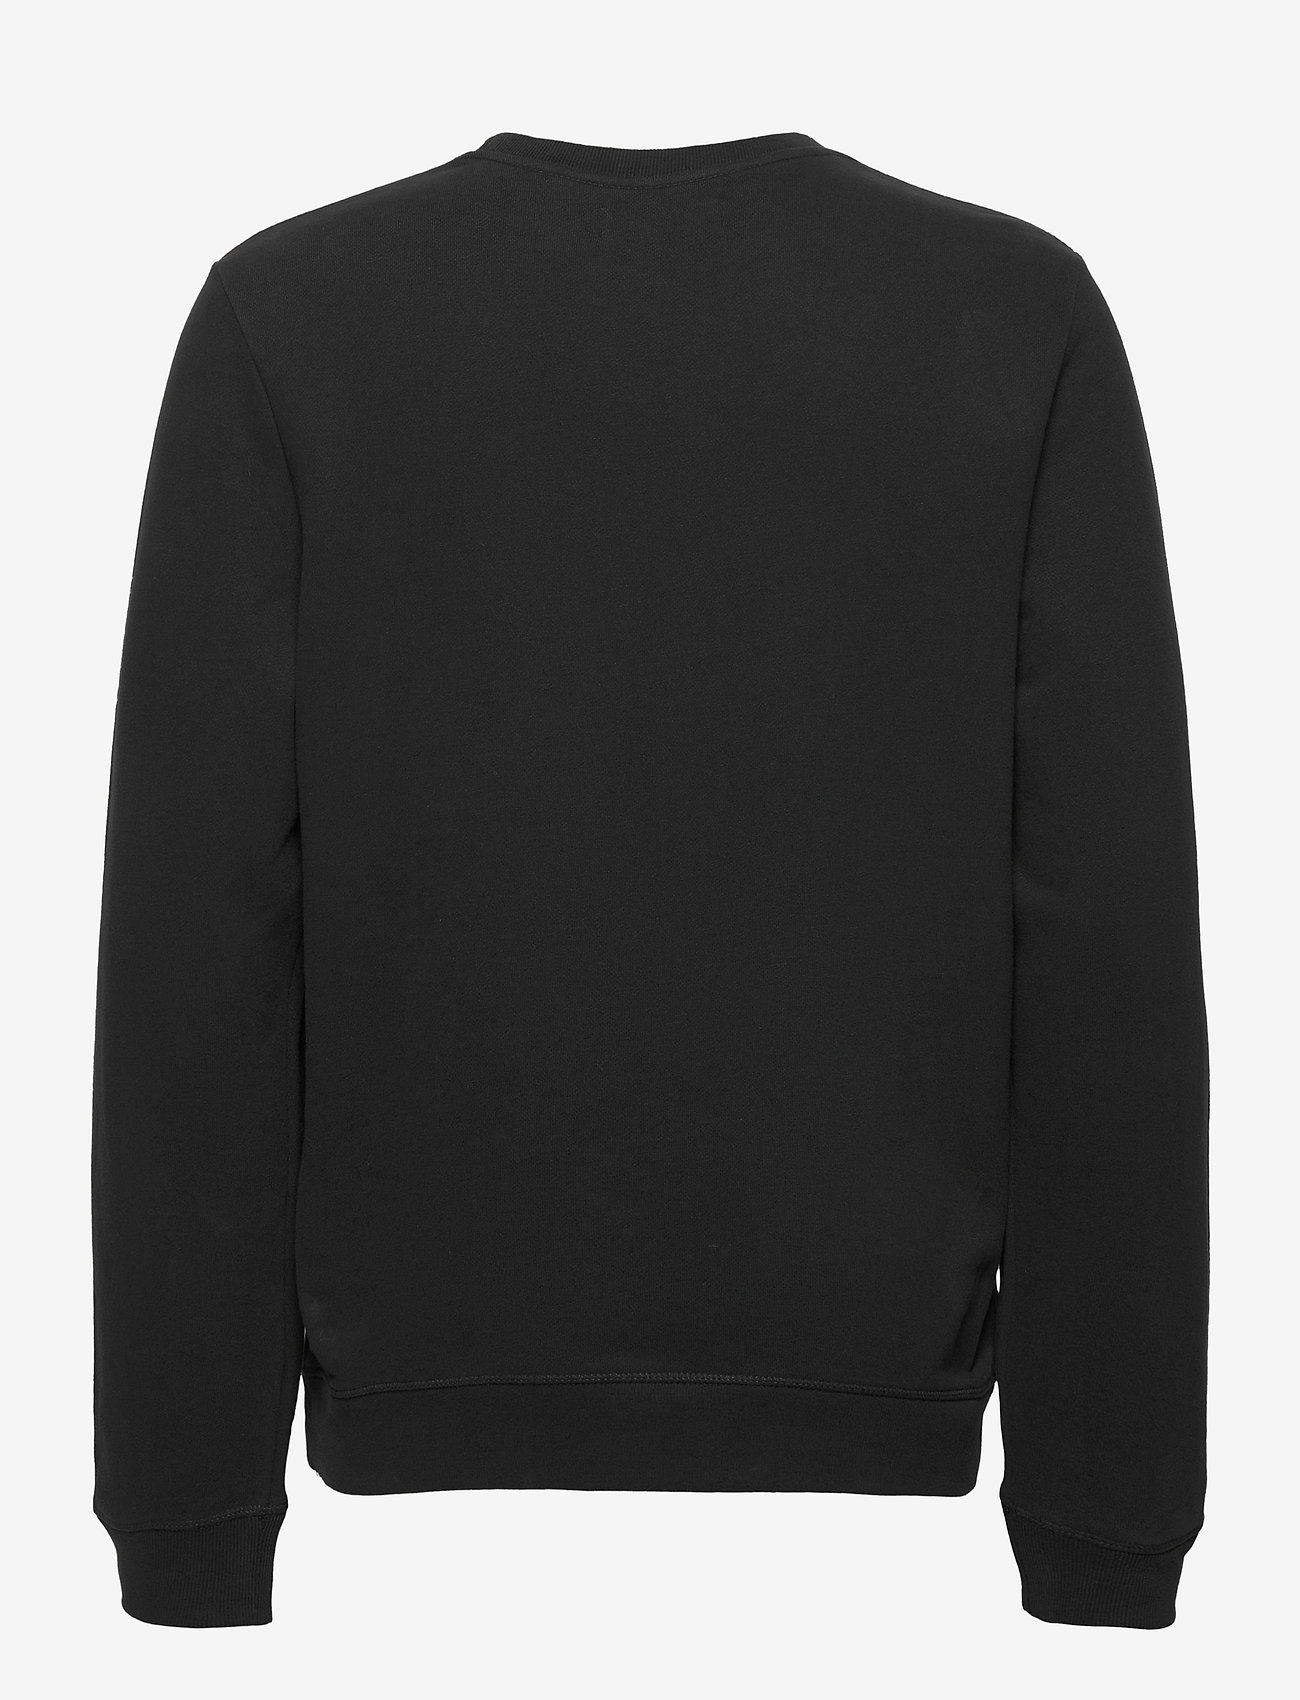 AllSaints - RAVEN CREW - sweatshirts - black - 1